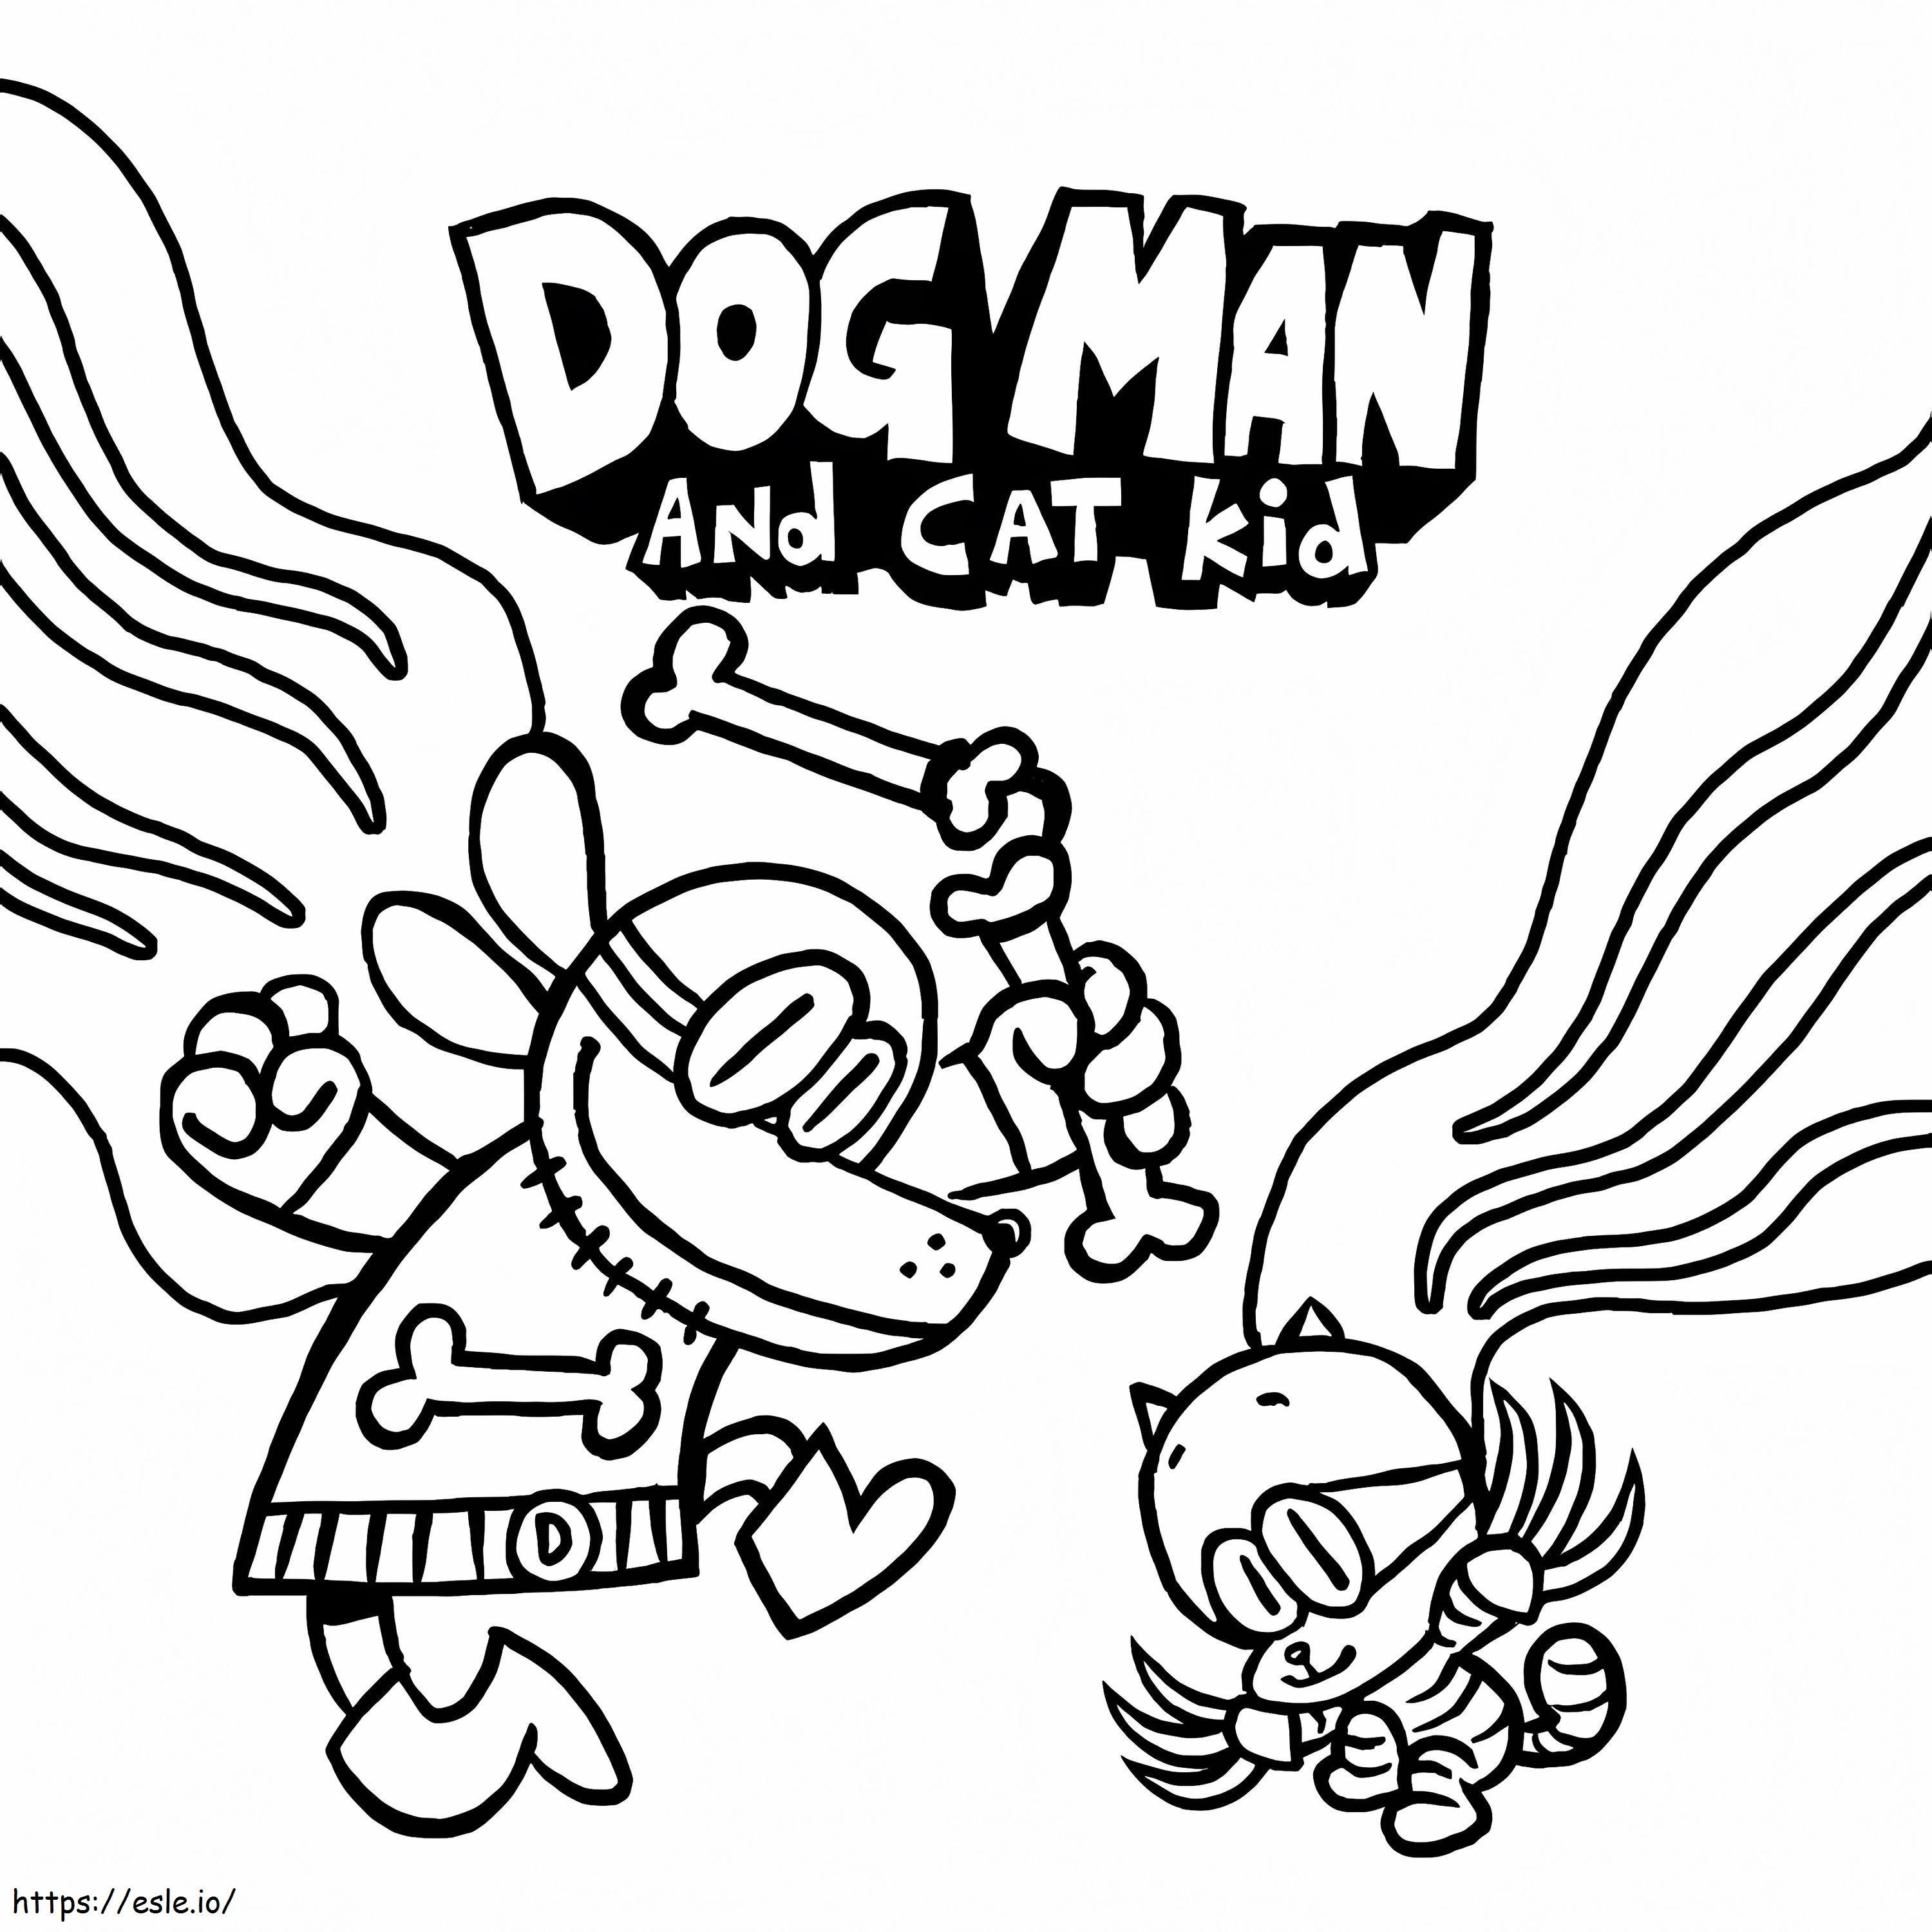 Dog Man 3 coloring page